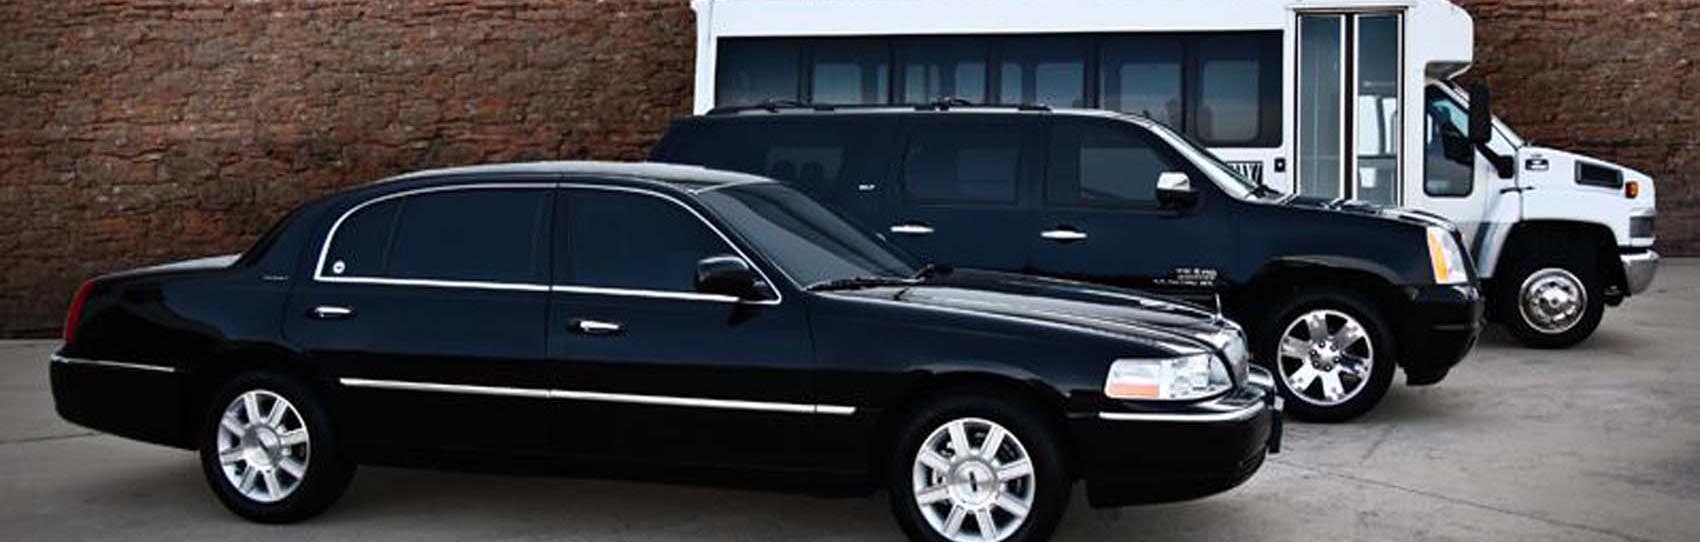 Dallas Limousine Upscale Luxury Transportation